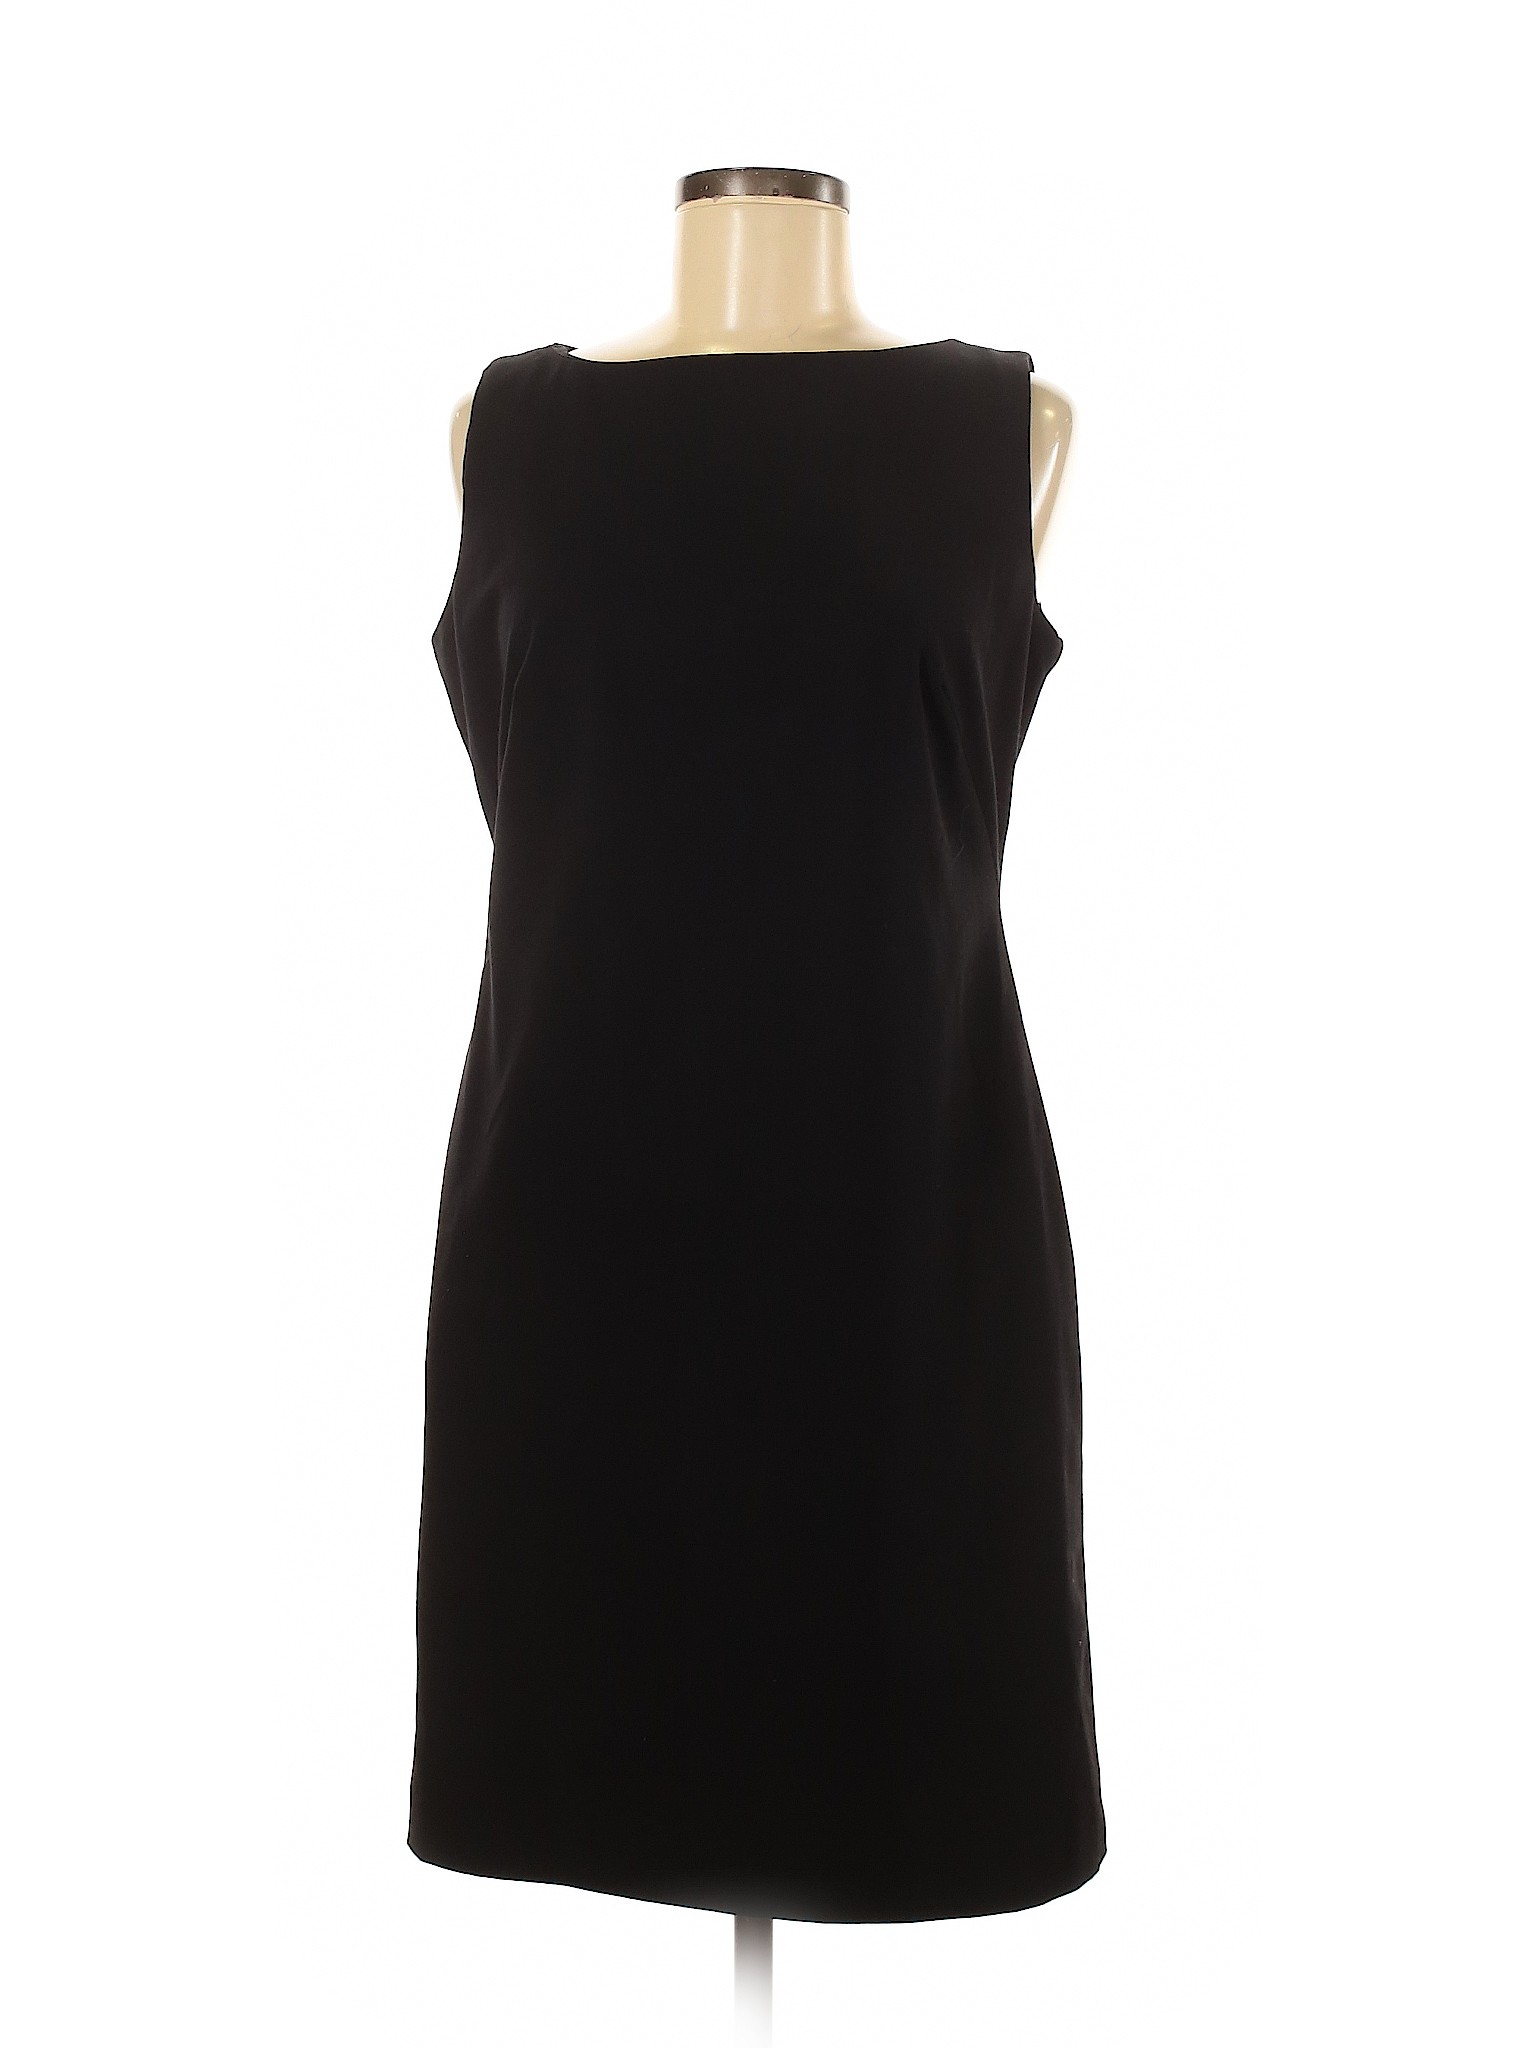 Liz Claiborne Women Black Casual Dress 6 Petites | eBay